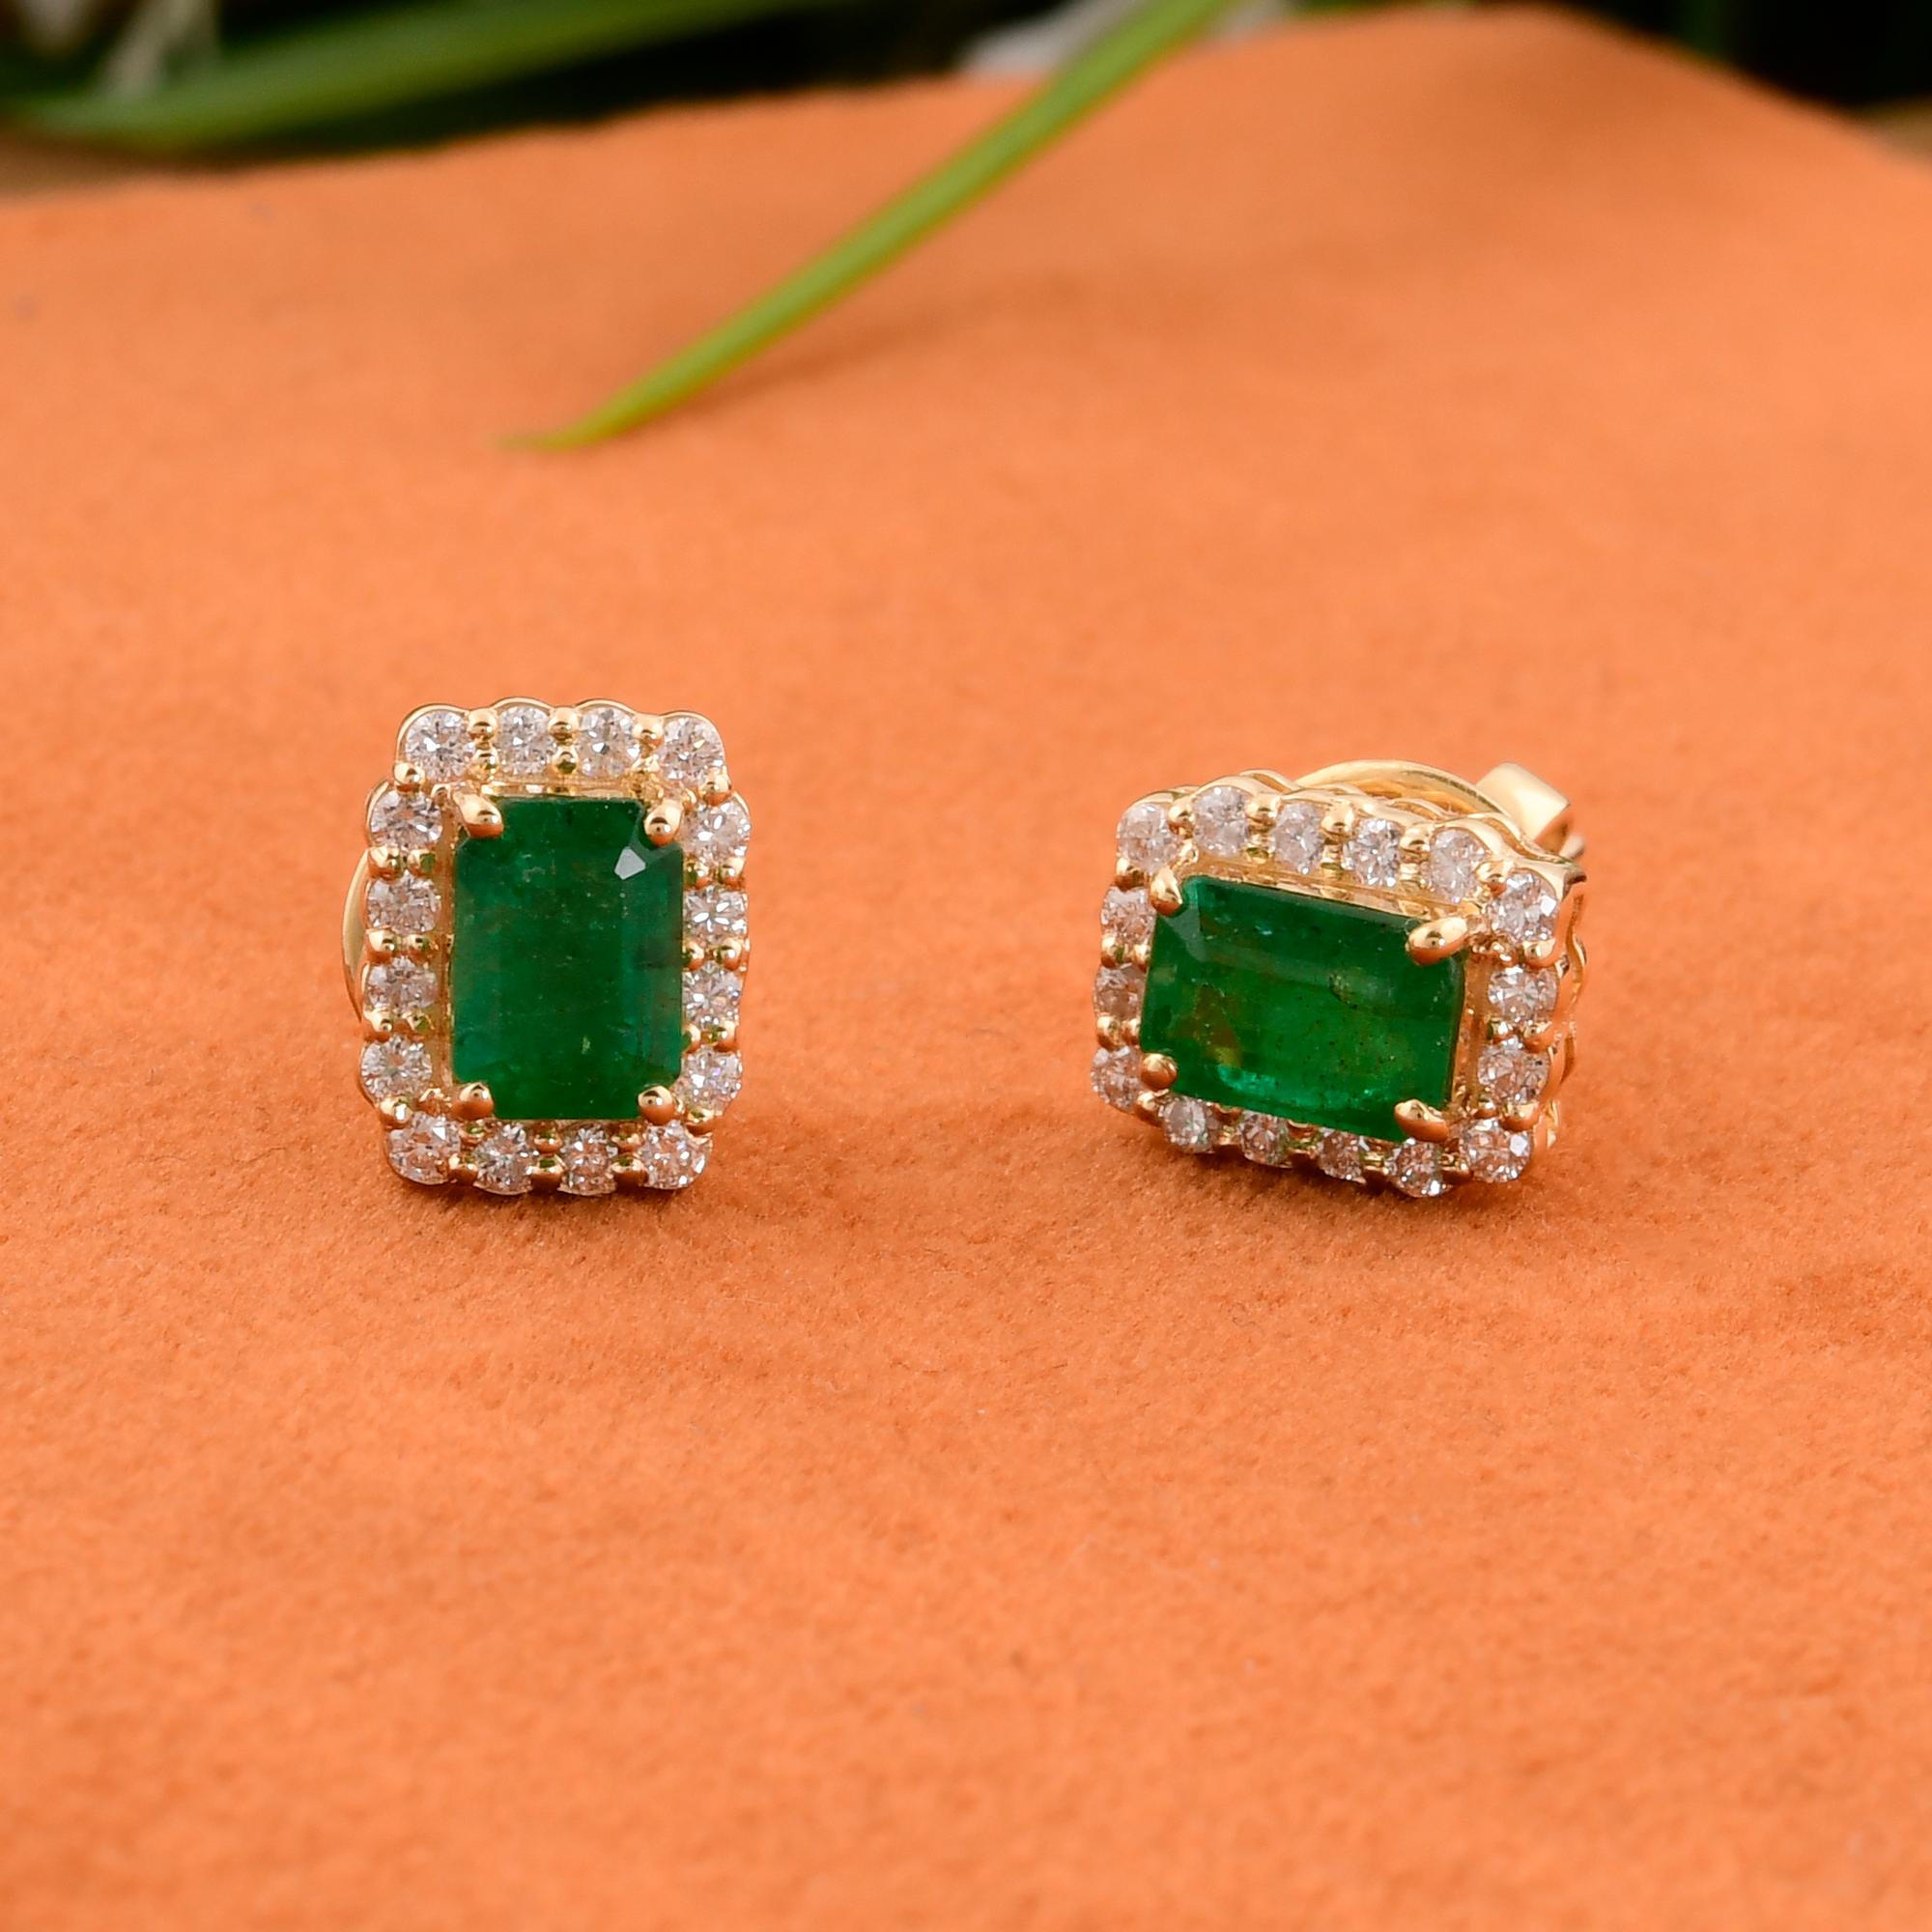 Modern Real Zambian Emerald Gemstone Stud Earrings Diamond 14 Karat White Gold Jewelry For Sale